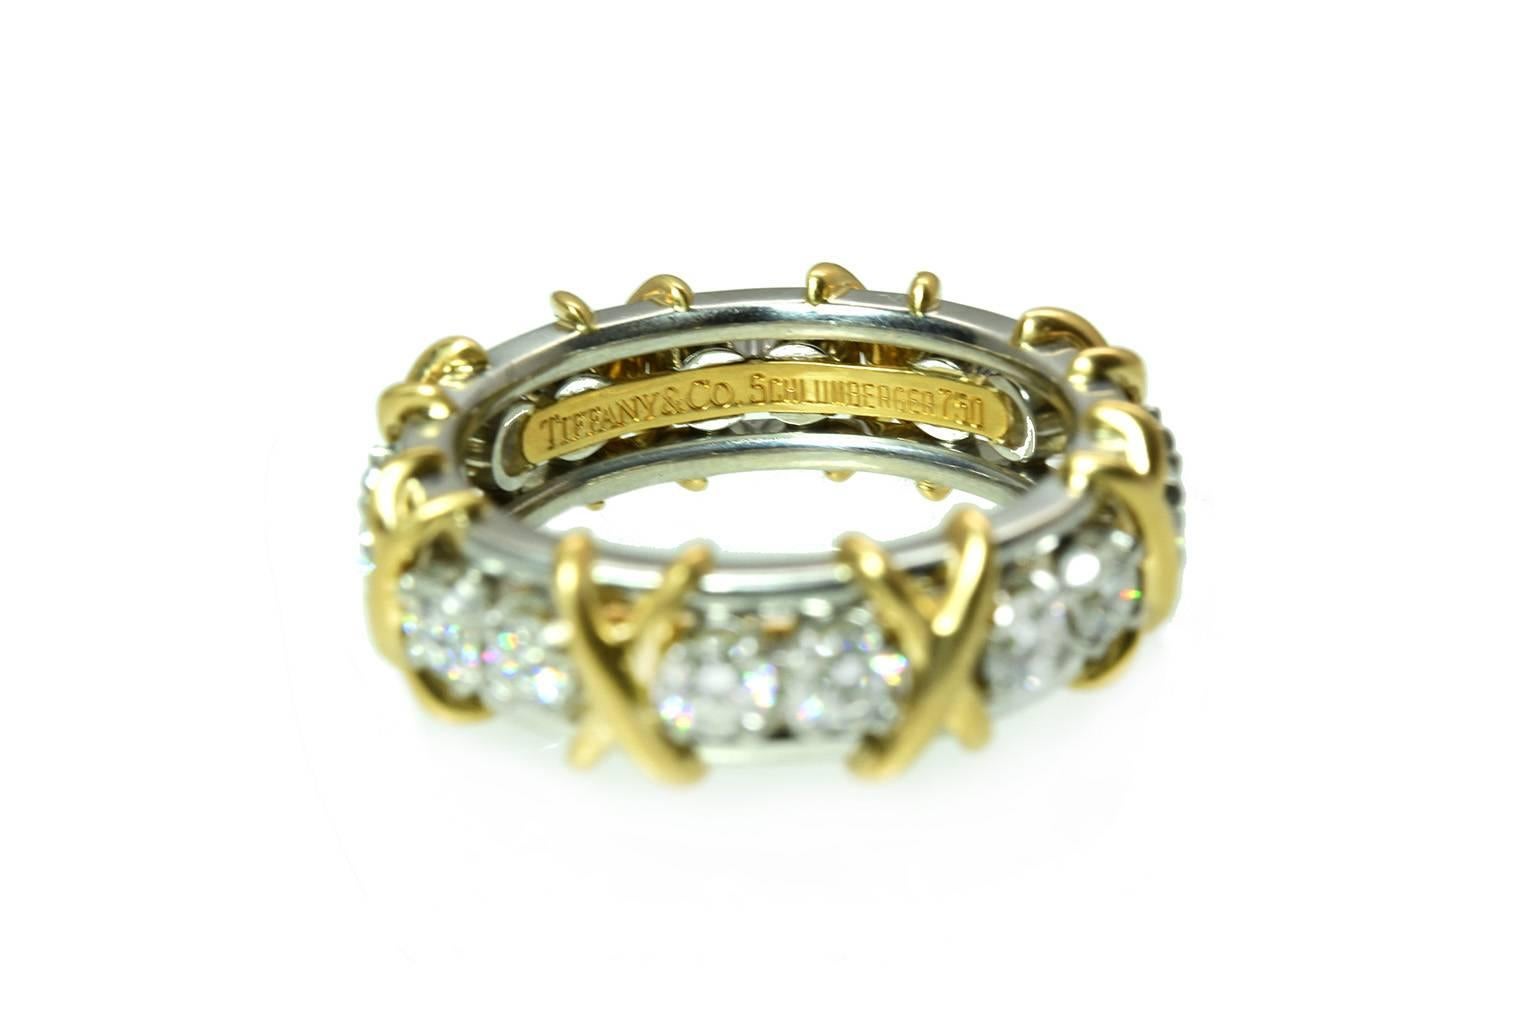 Tiffany X Diamond Band
16 Round Brilliant Diamonds approximately 1.12 carats total weight
18 Karat Yellow Gold/ Platinum
Ring Size 5.5